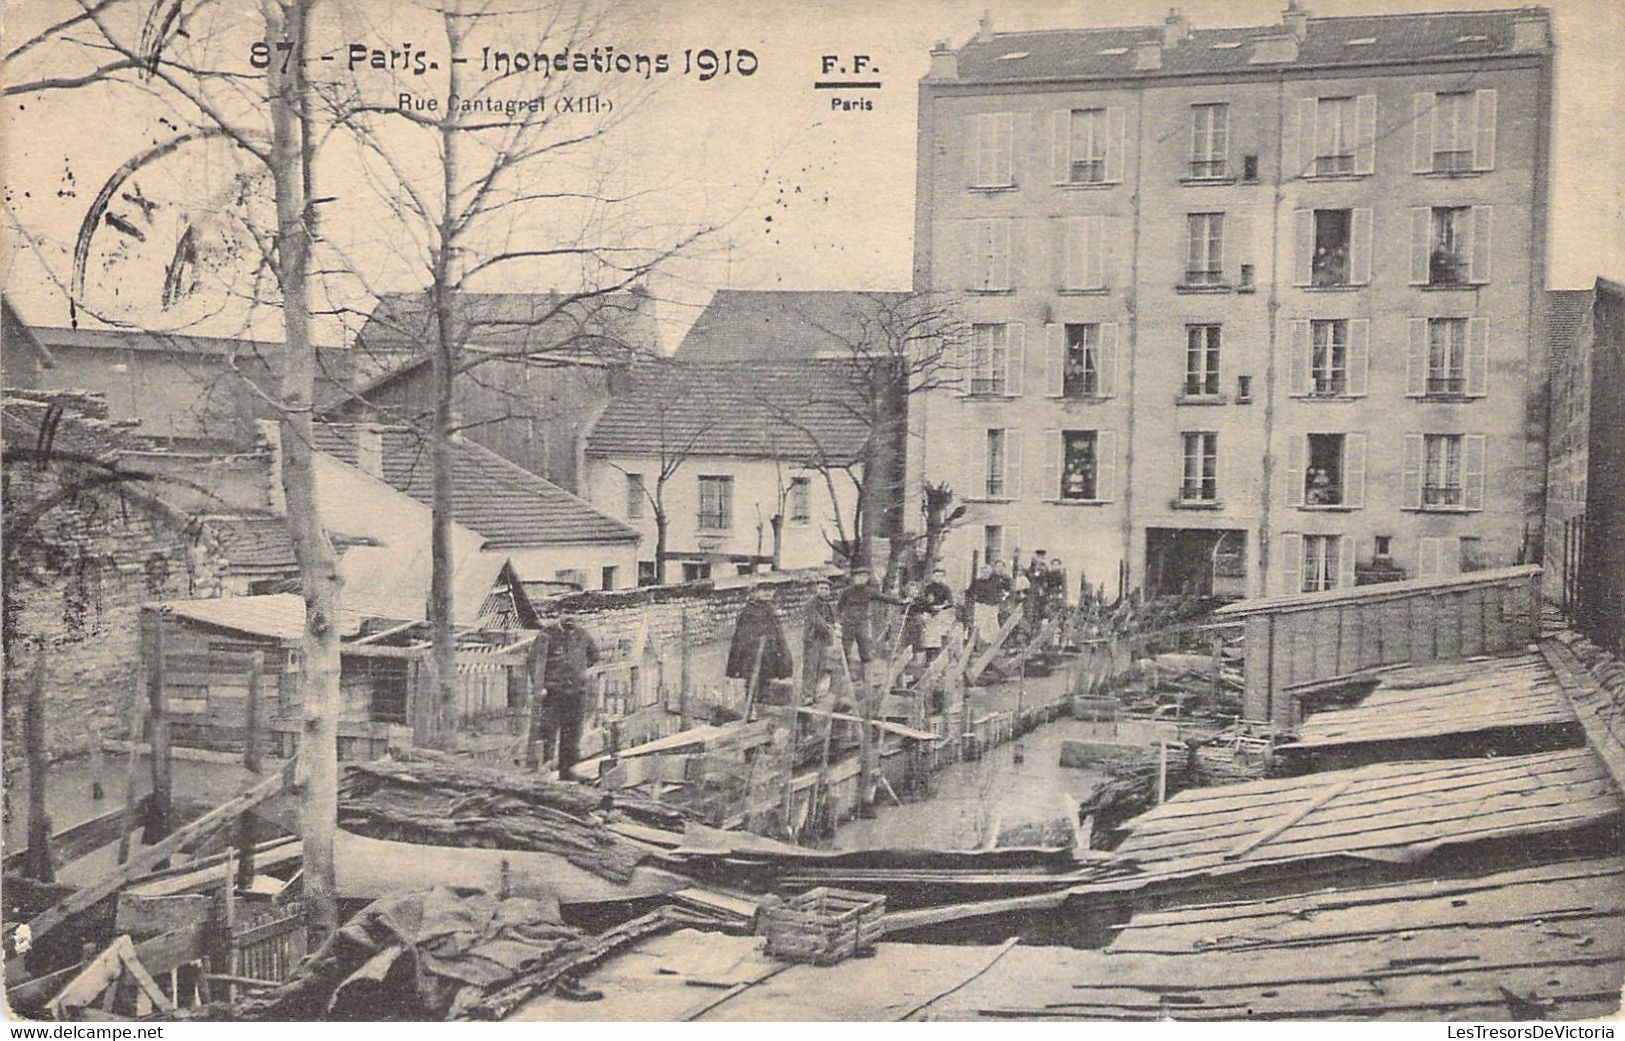 CPA France - Paris - Inondations De 1910 - Rue Cantagrel - XIIIe - F. F. Paris - Oblitérée Bruxelles 1910 - Inondations De 1910